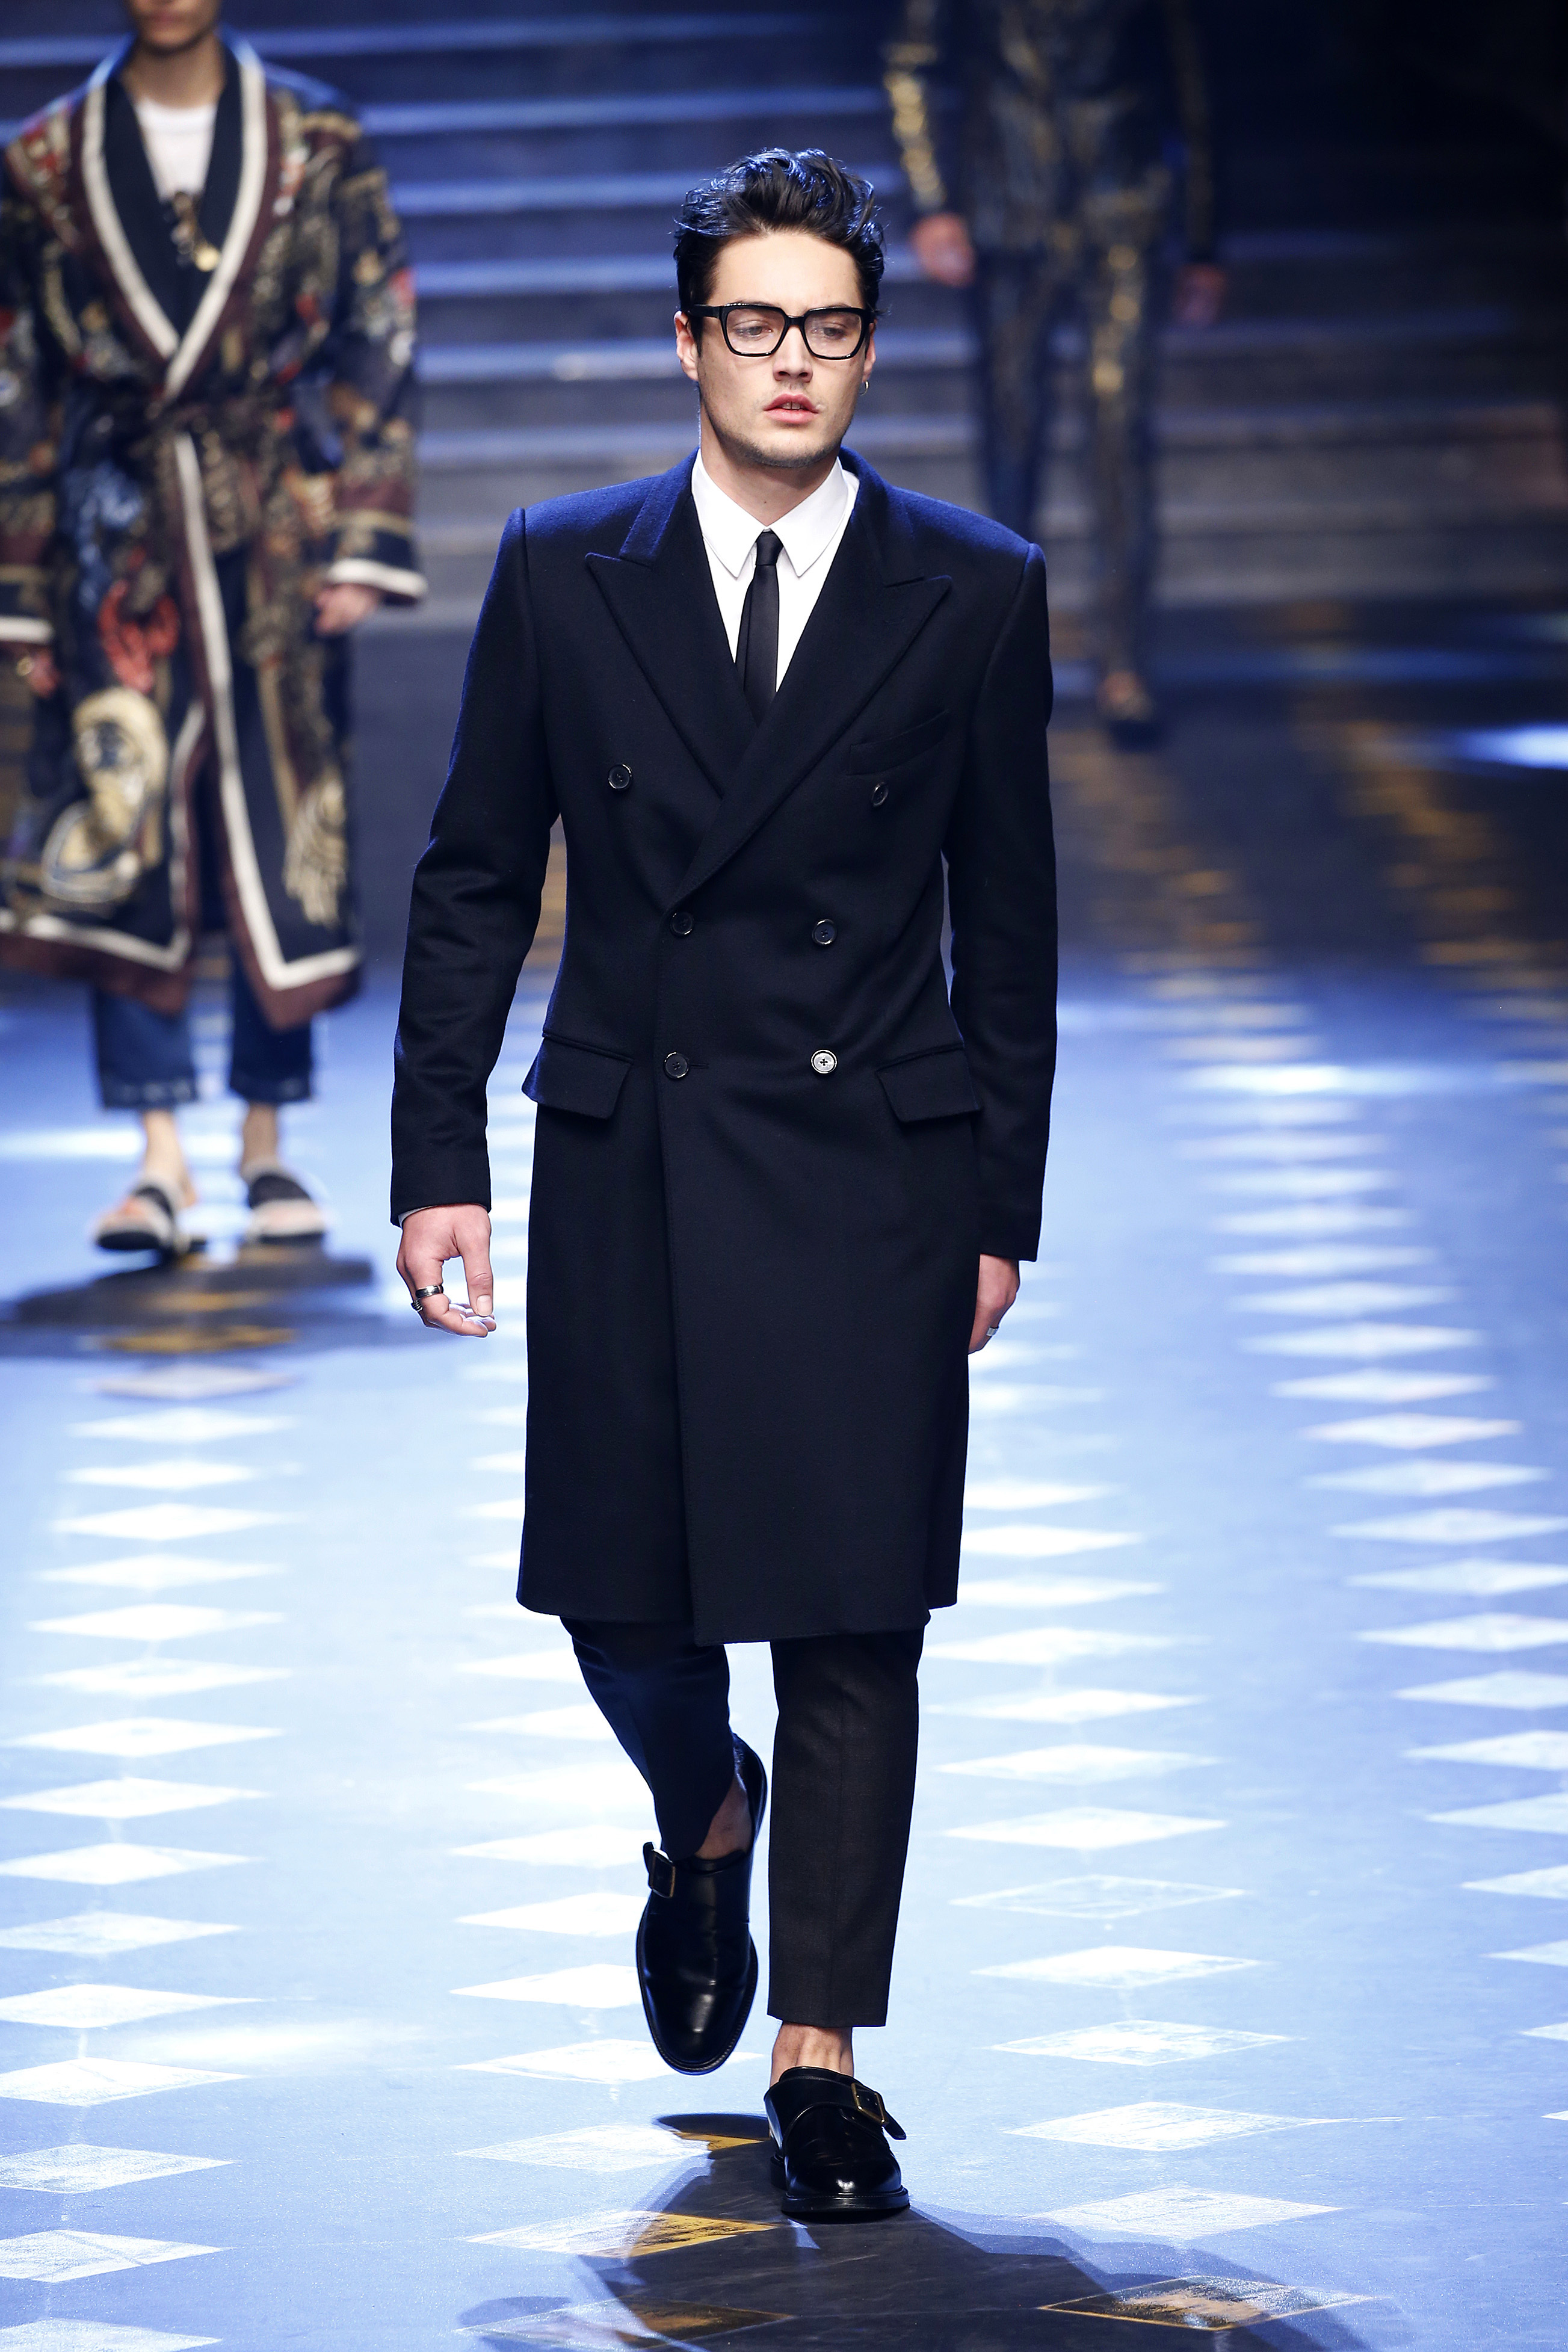 Levi Dylan walking runway for Dolce & Gabbana